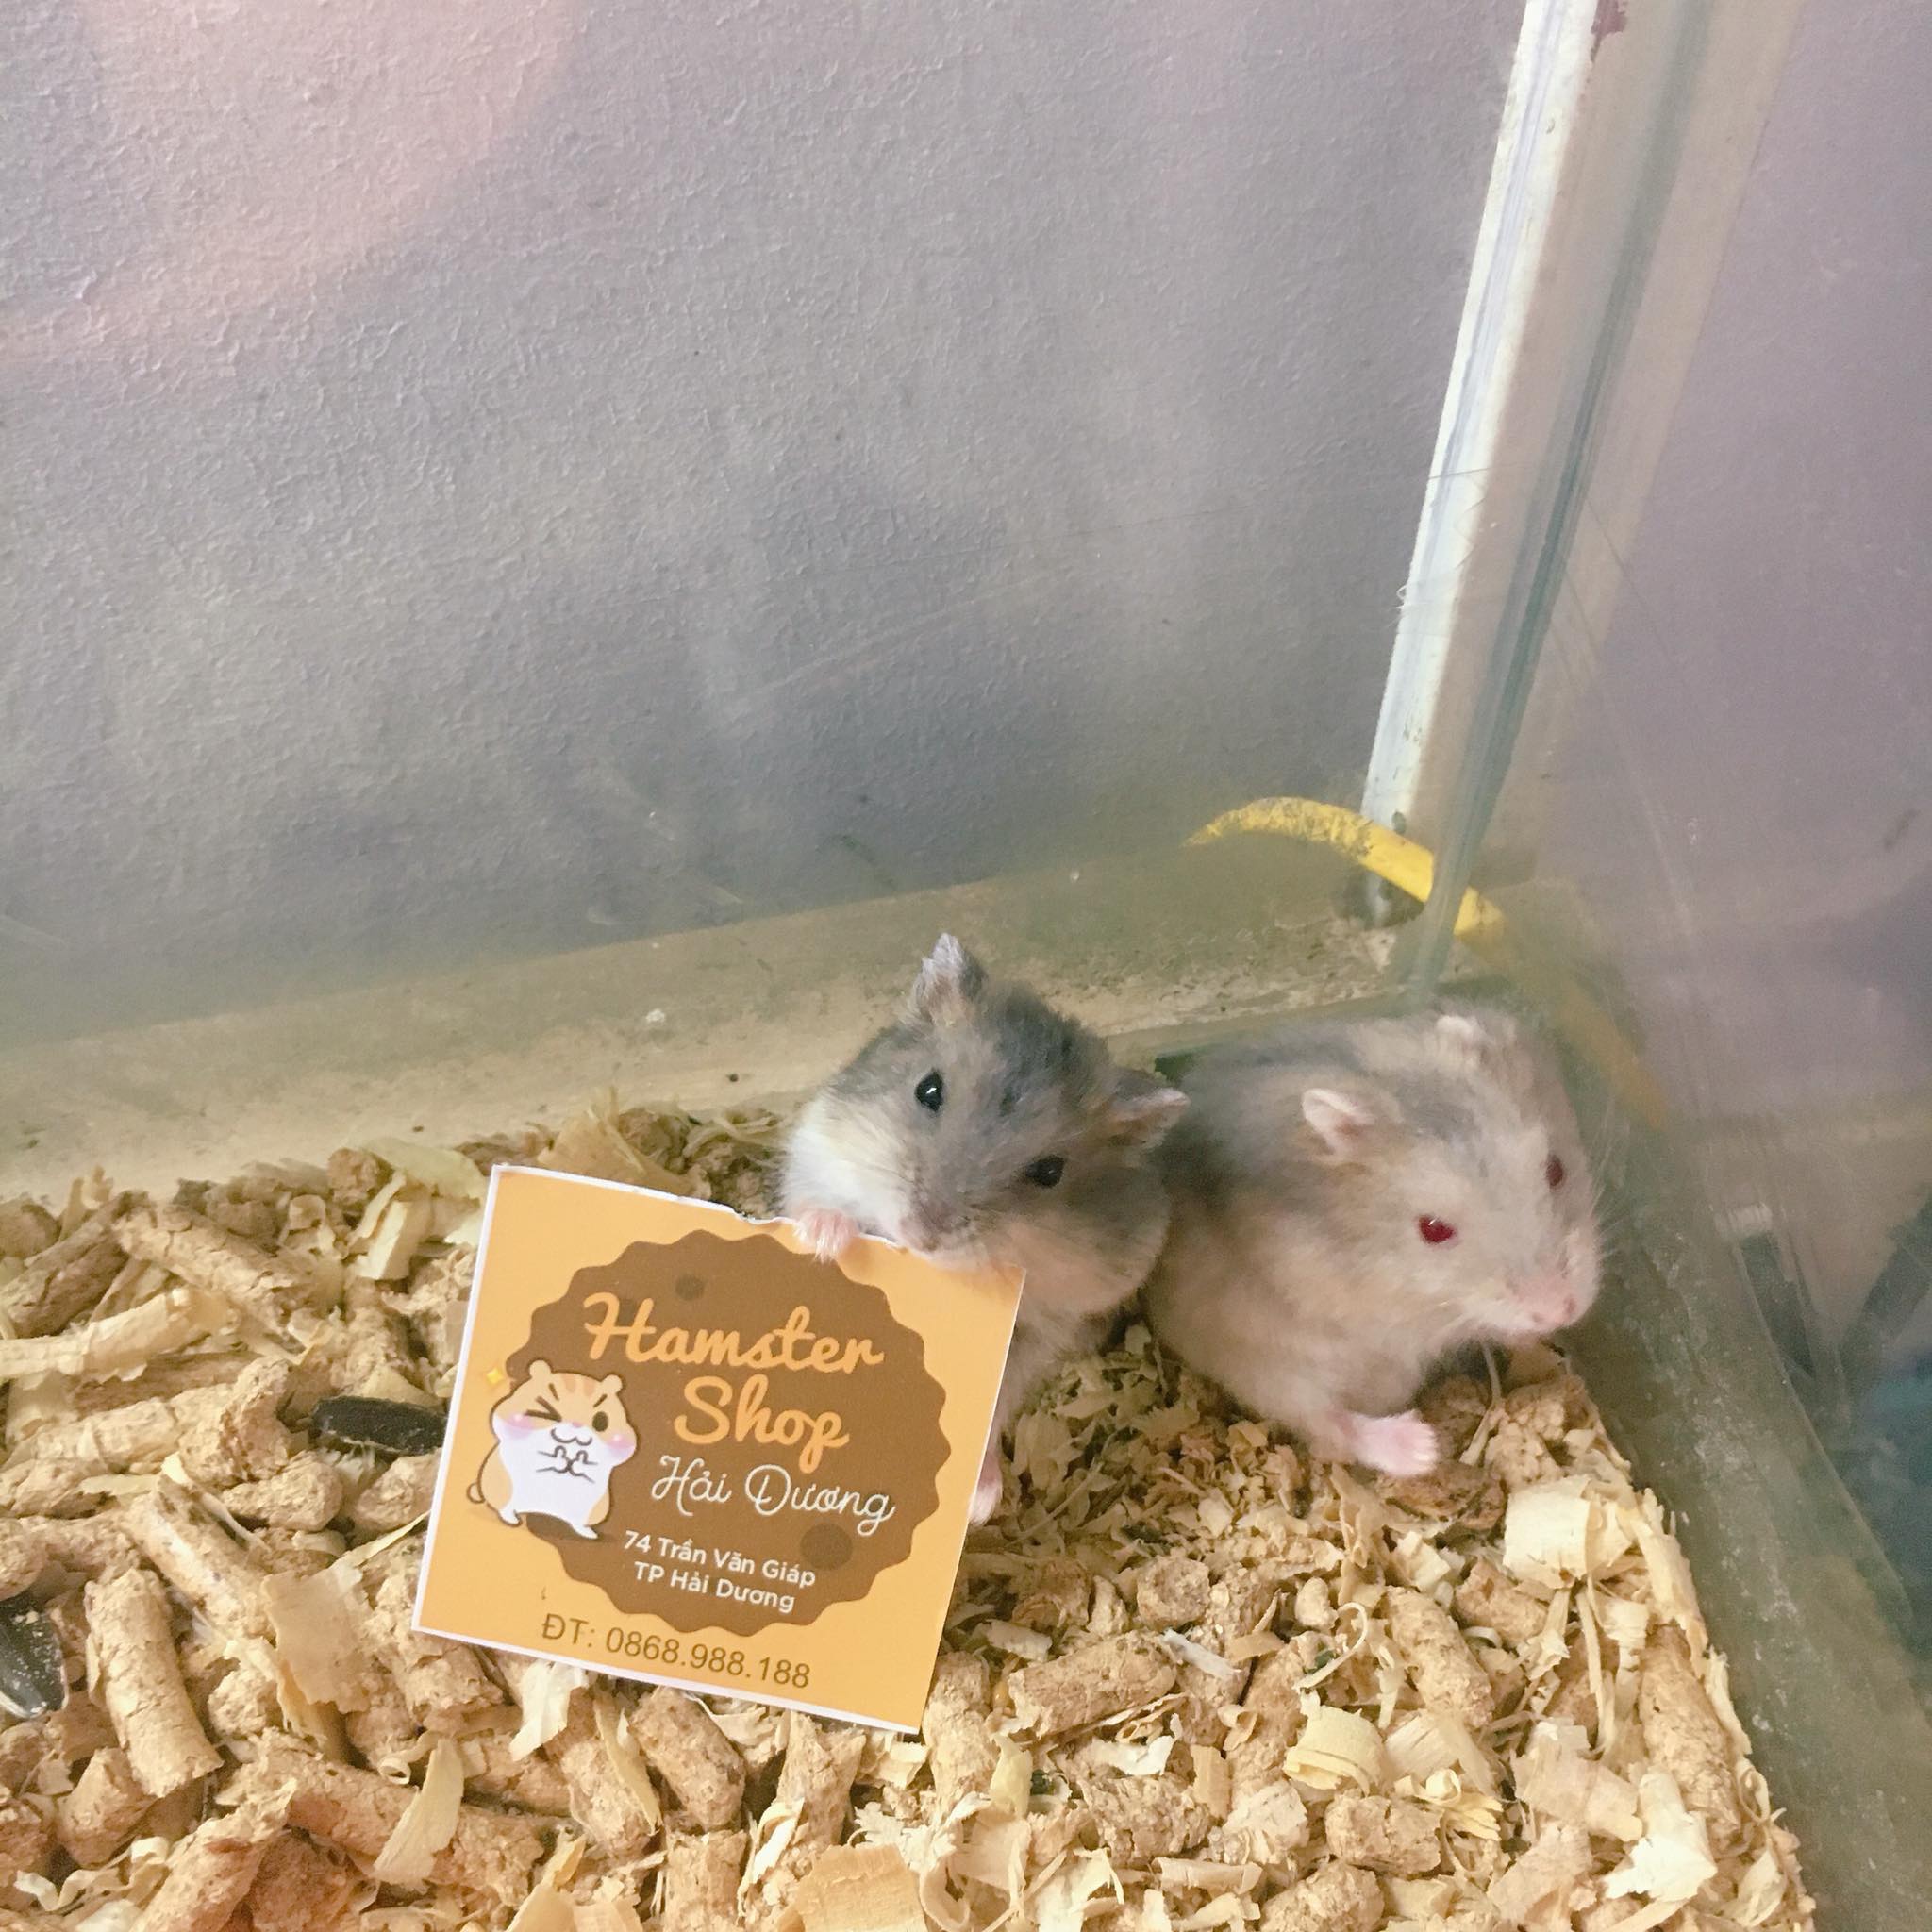 Hamster Shop Hải Dương - Shop Hamster giá rẻ